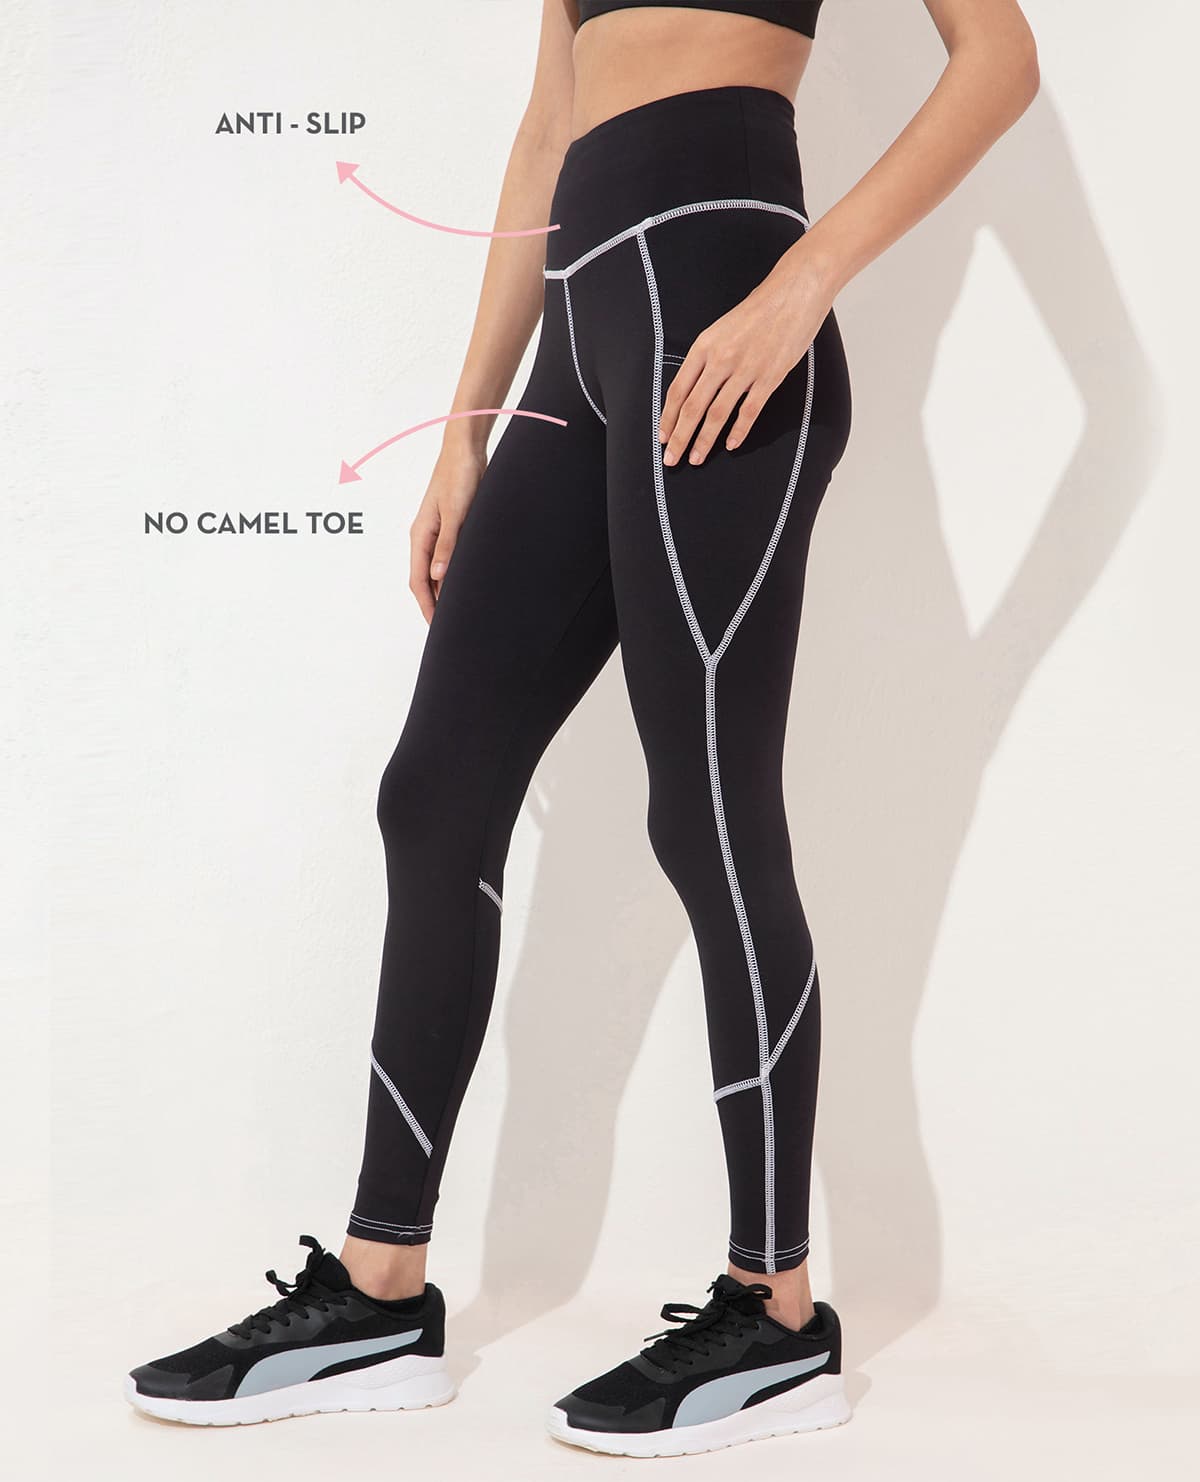 CHARMKING High Waisted Leggings Pants Women's Tummy Control Yoga Pant  Workout Running Legging-Reg&Plus Size (02 Black/Dark Grey/Navy, Small)